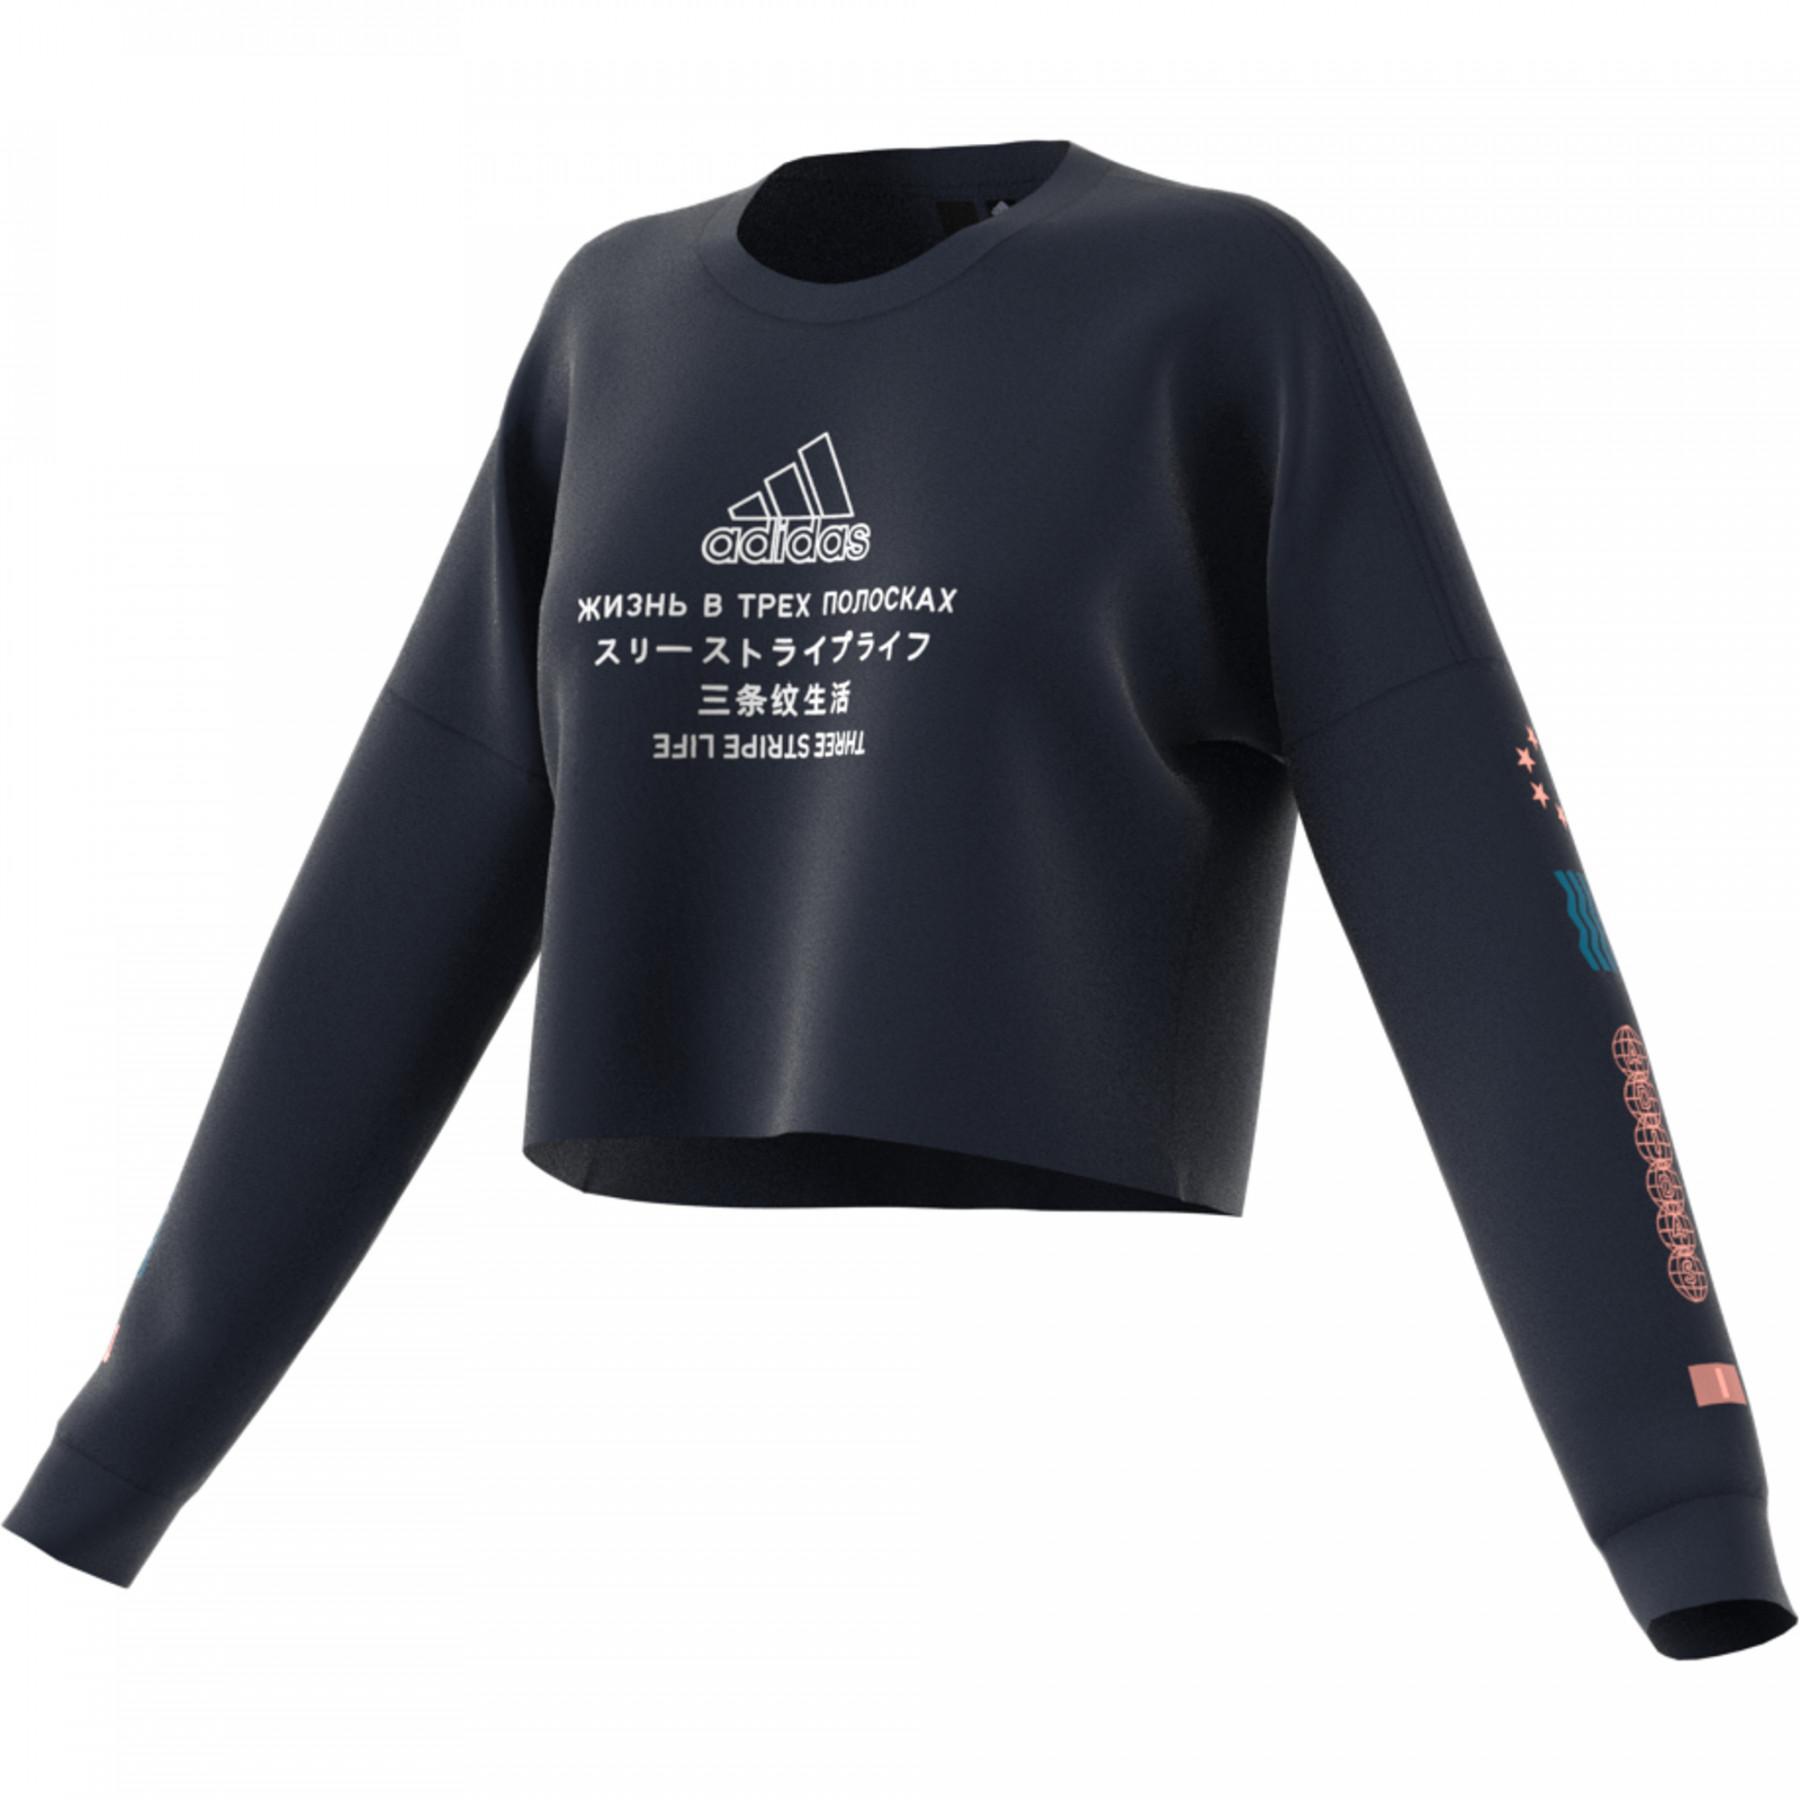 Sweatshirt femme adidas Global citizen Cropped